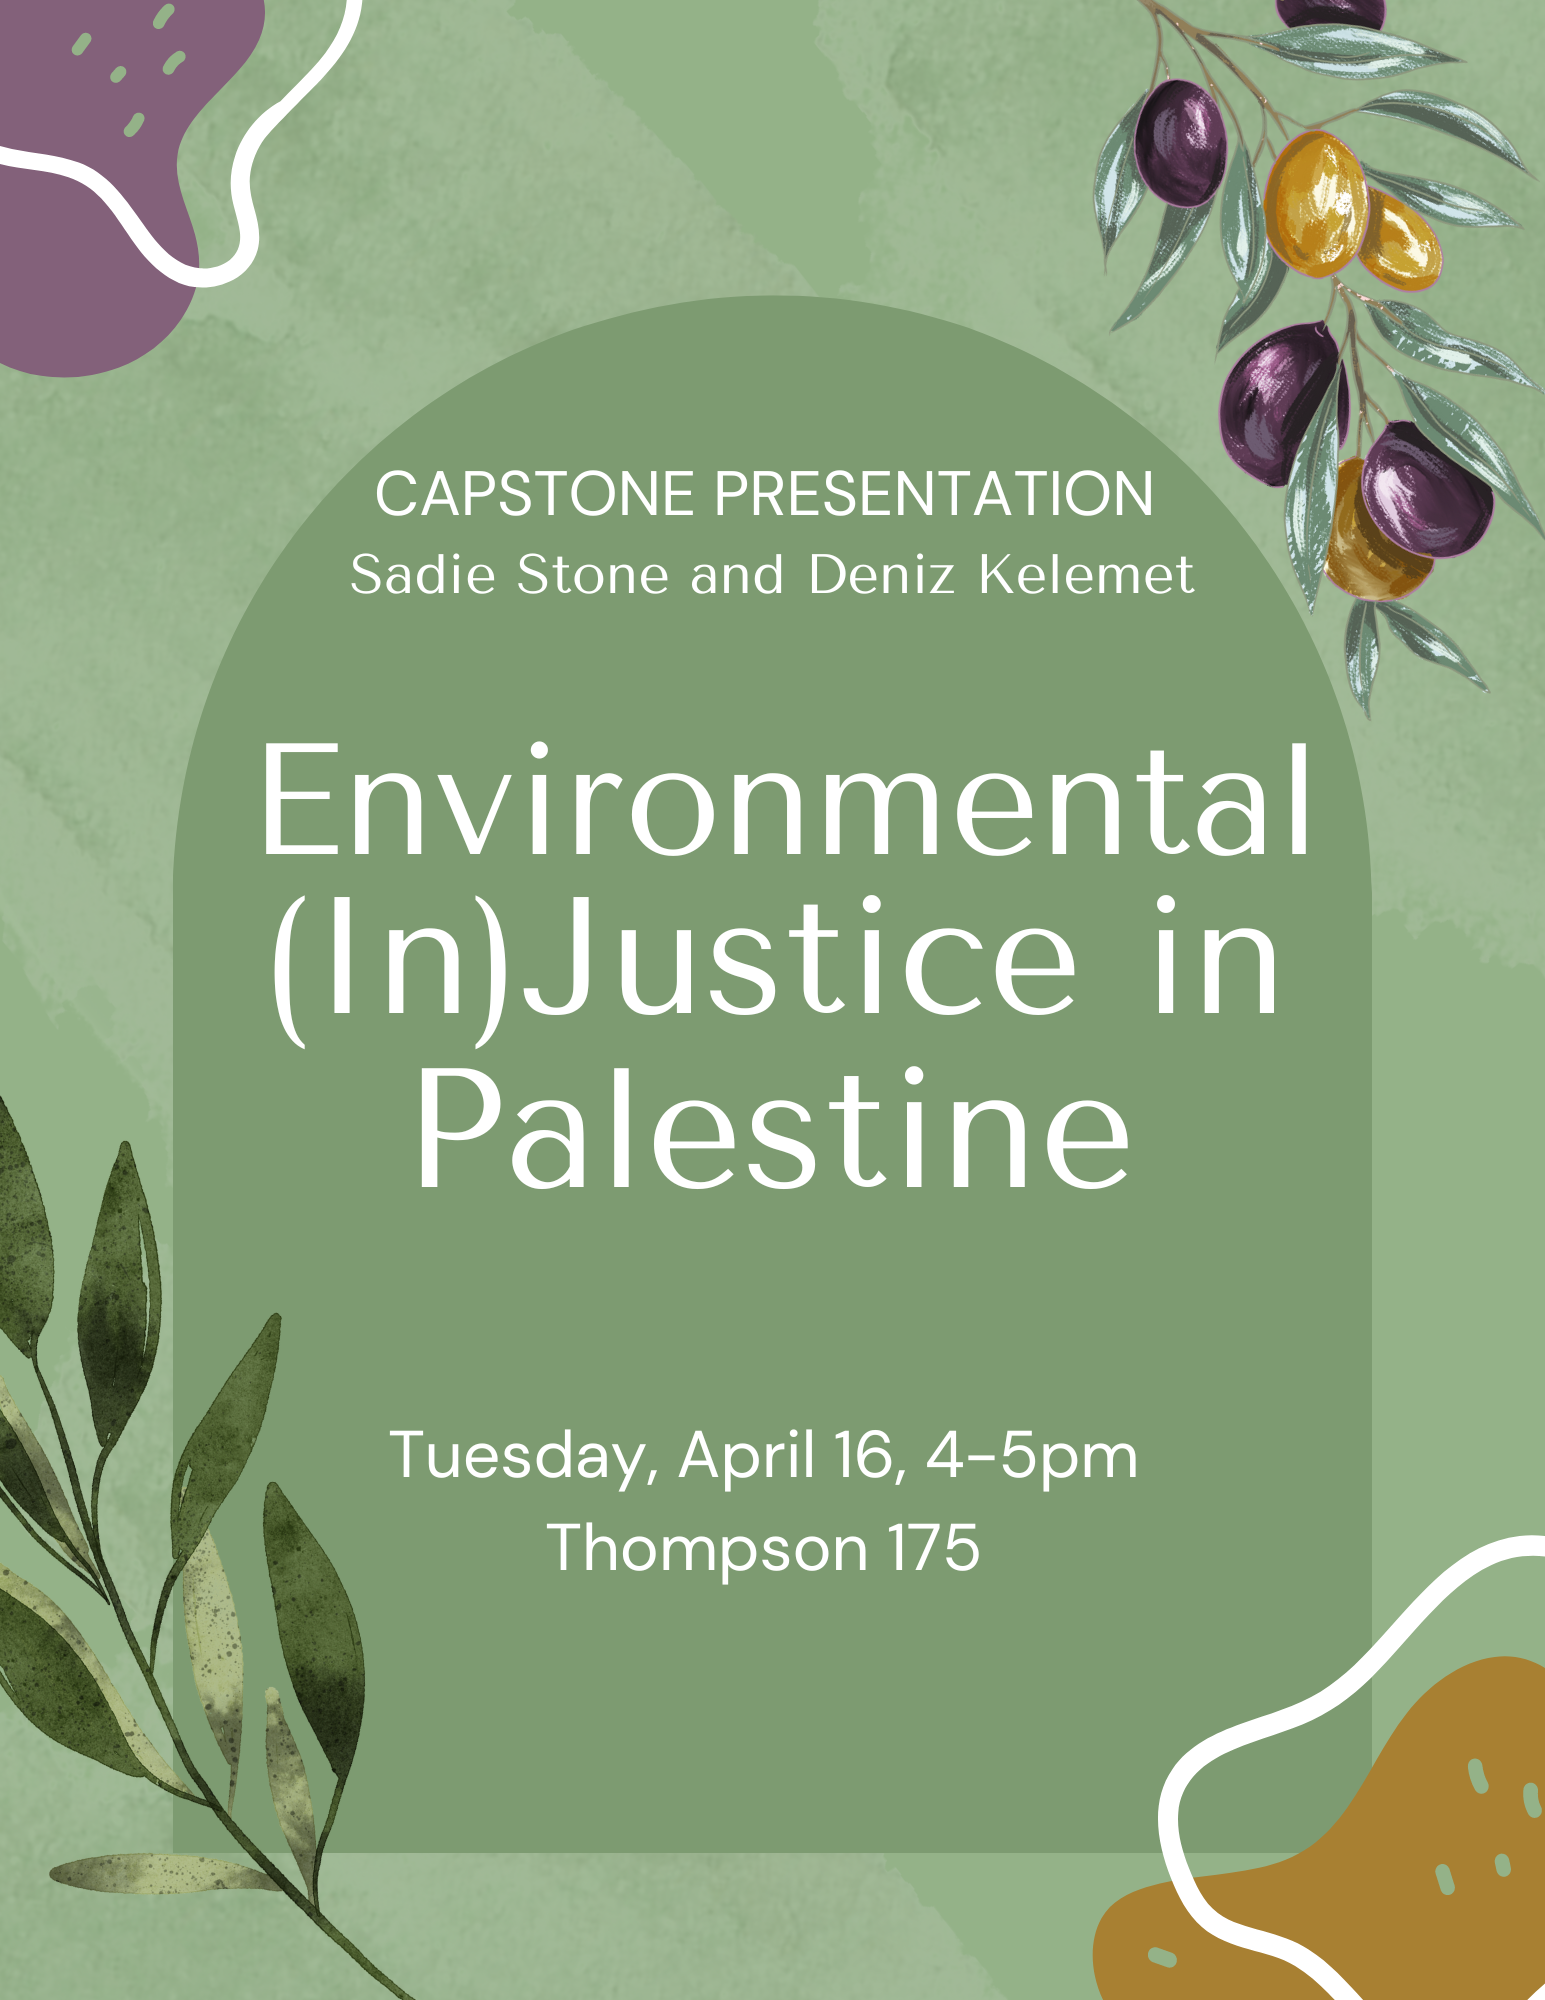 Environmental justice in Palestine